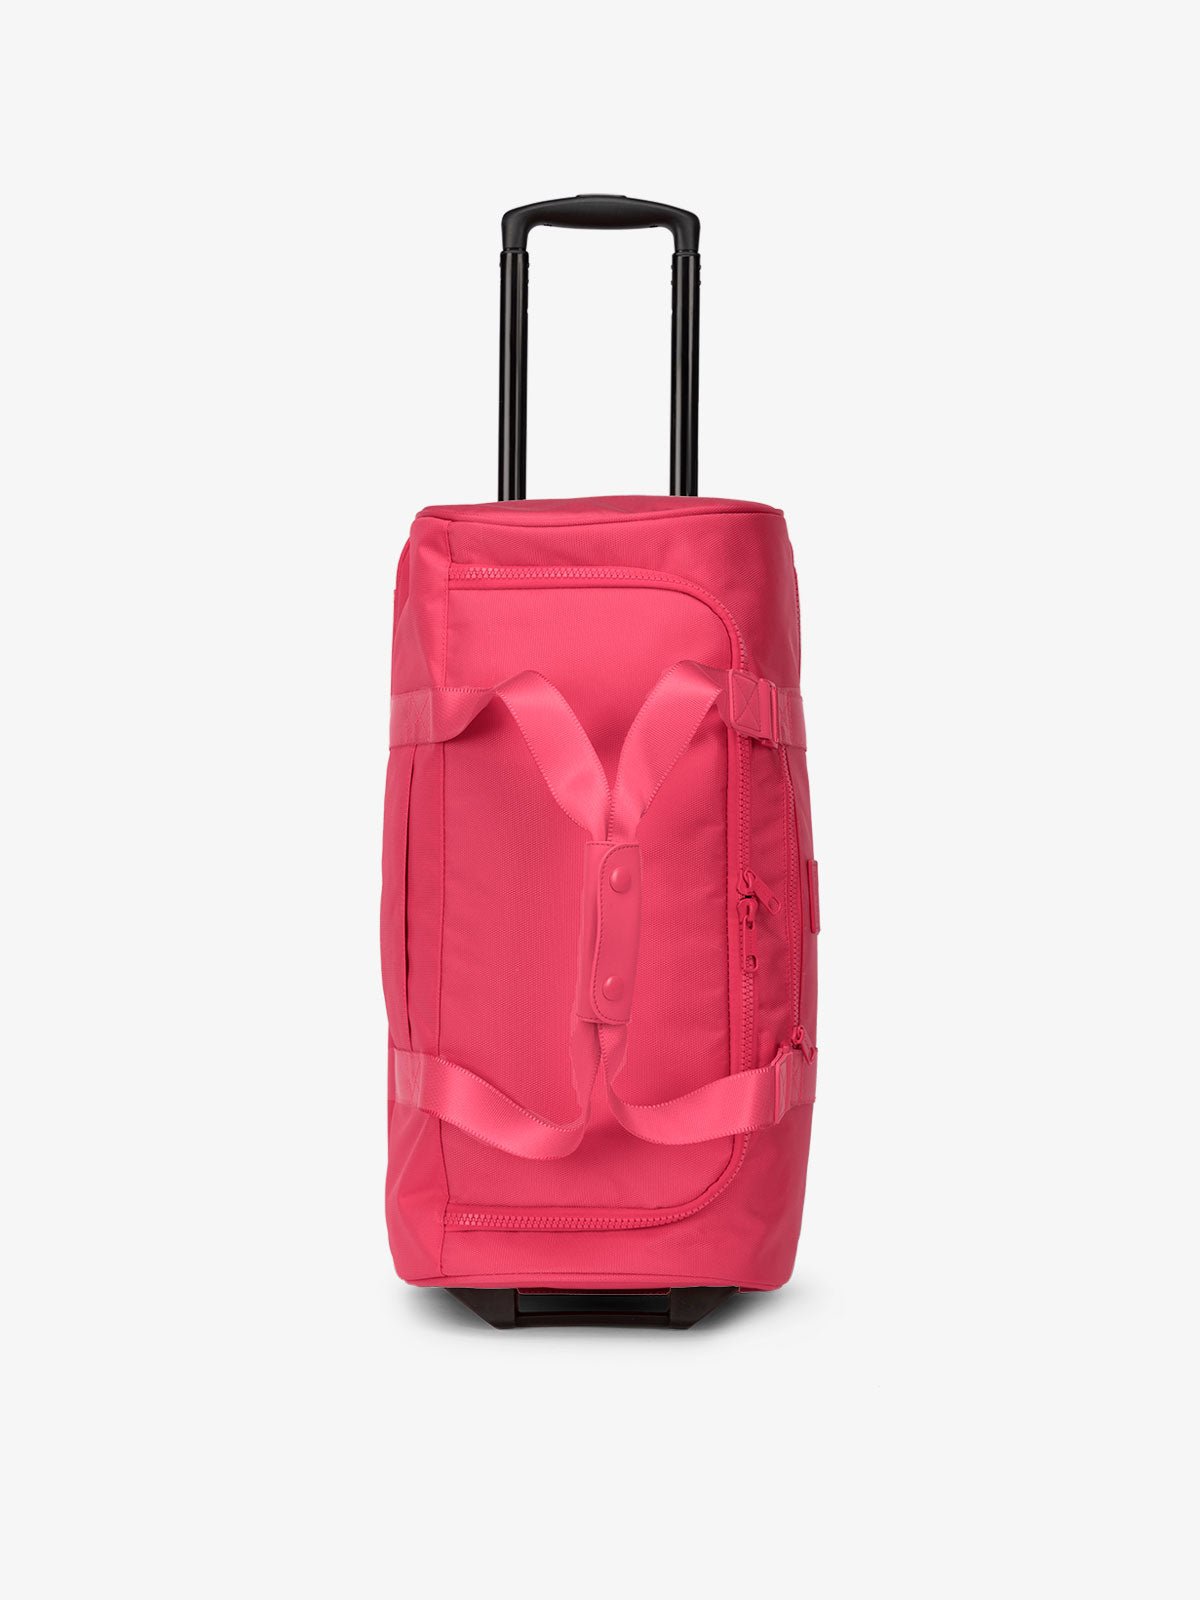 CALPAK Stevyn Rolling Duffle carry-on 22-inch bag in dragonfruit